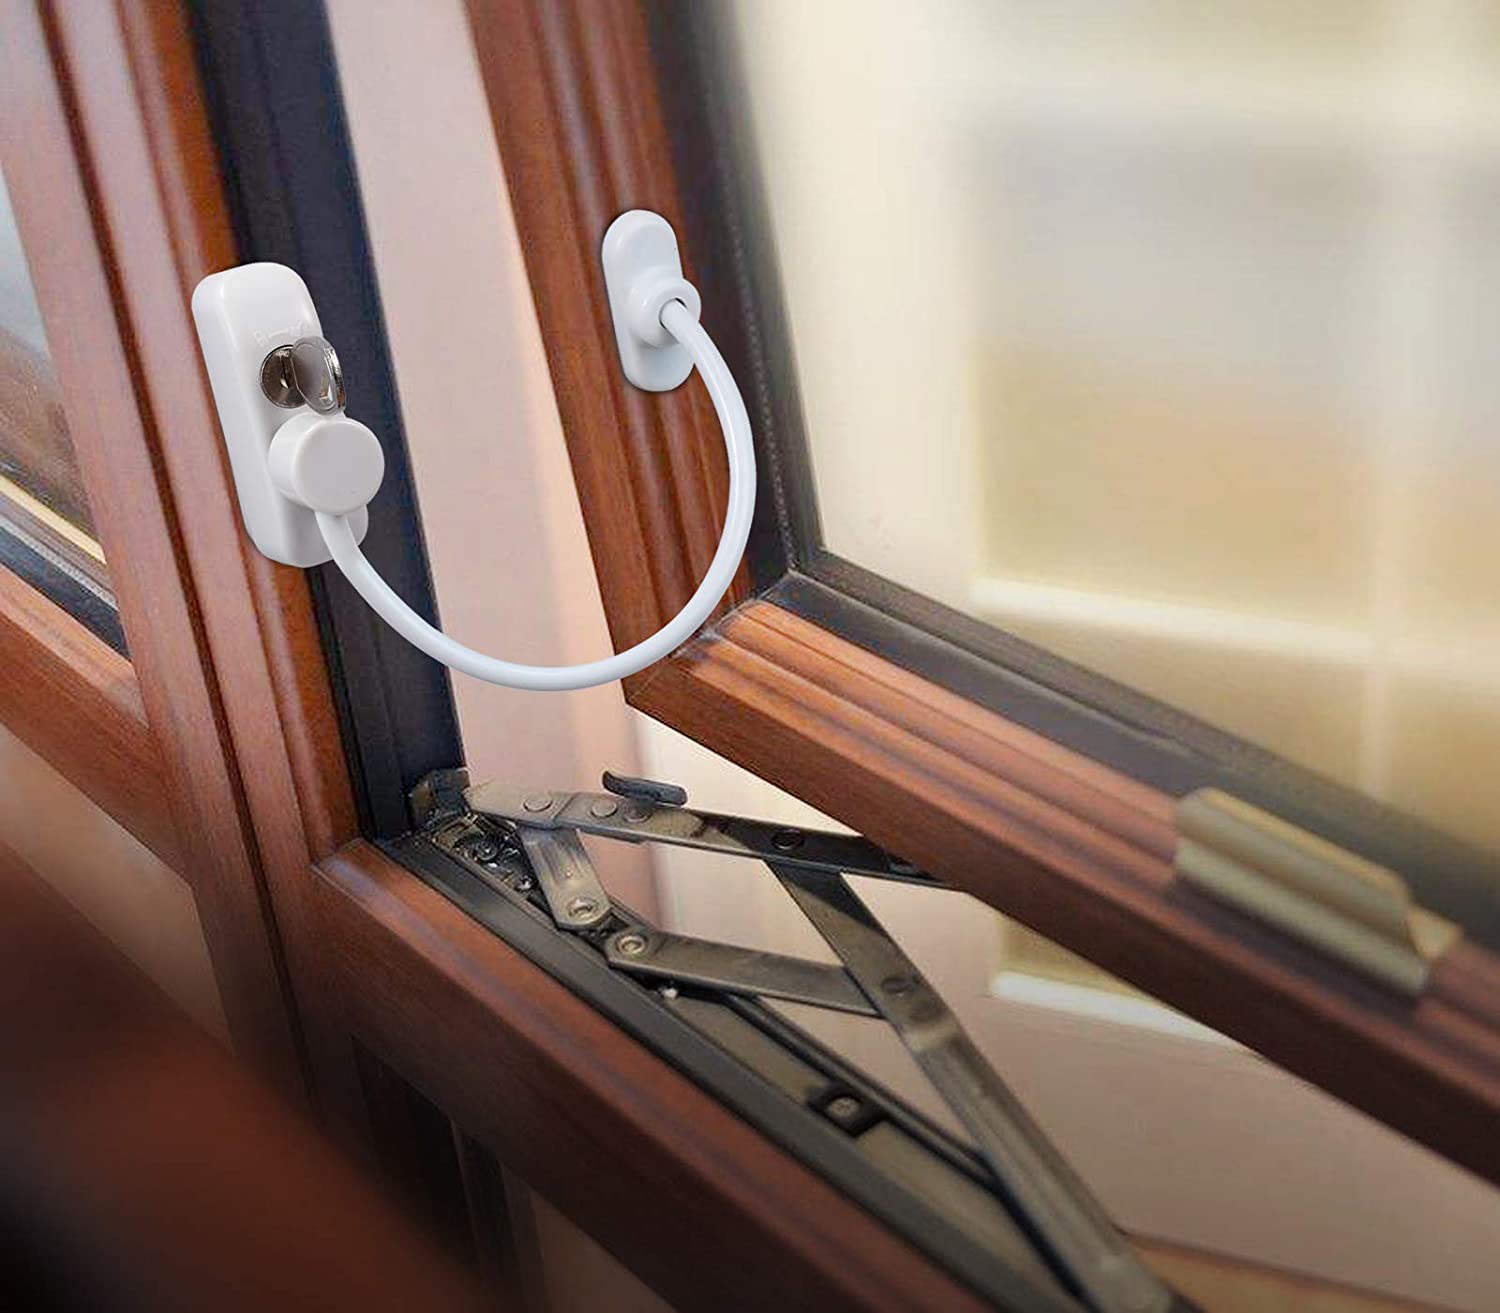 Neoteck 2PCS Window Door Cable Restrictor Lock White